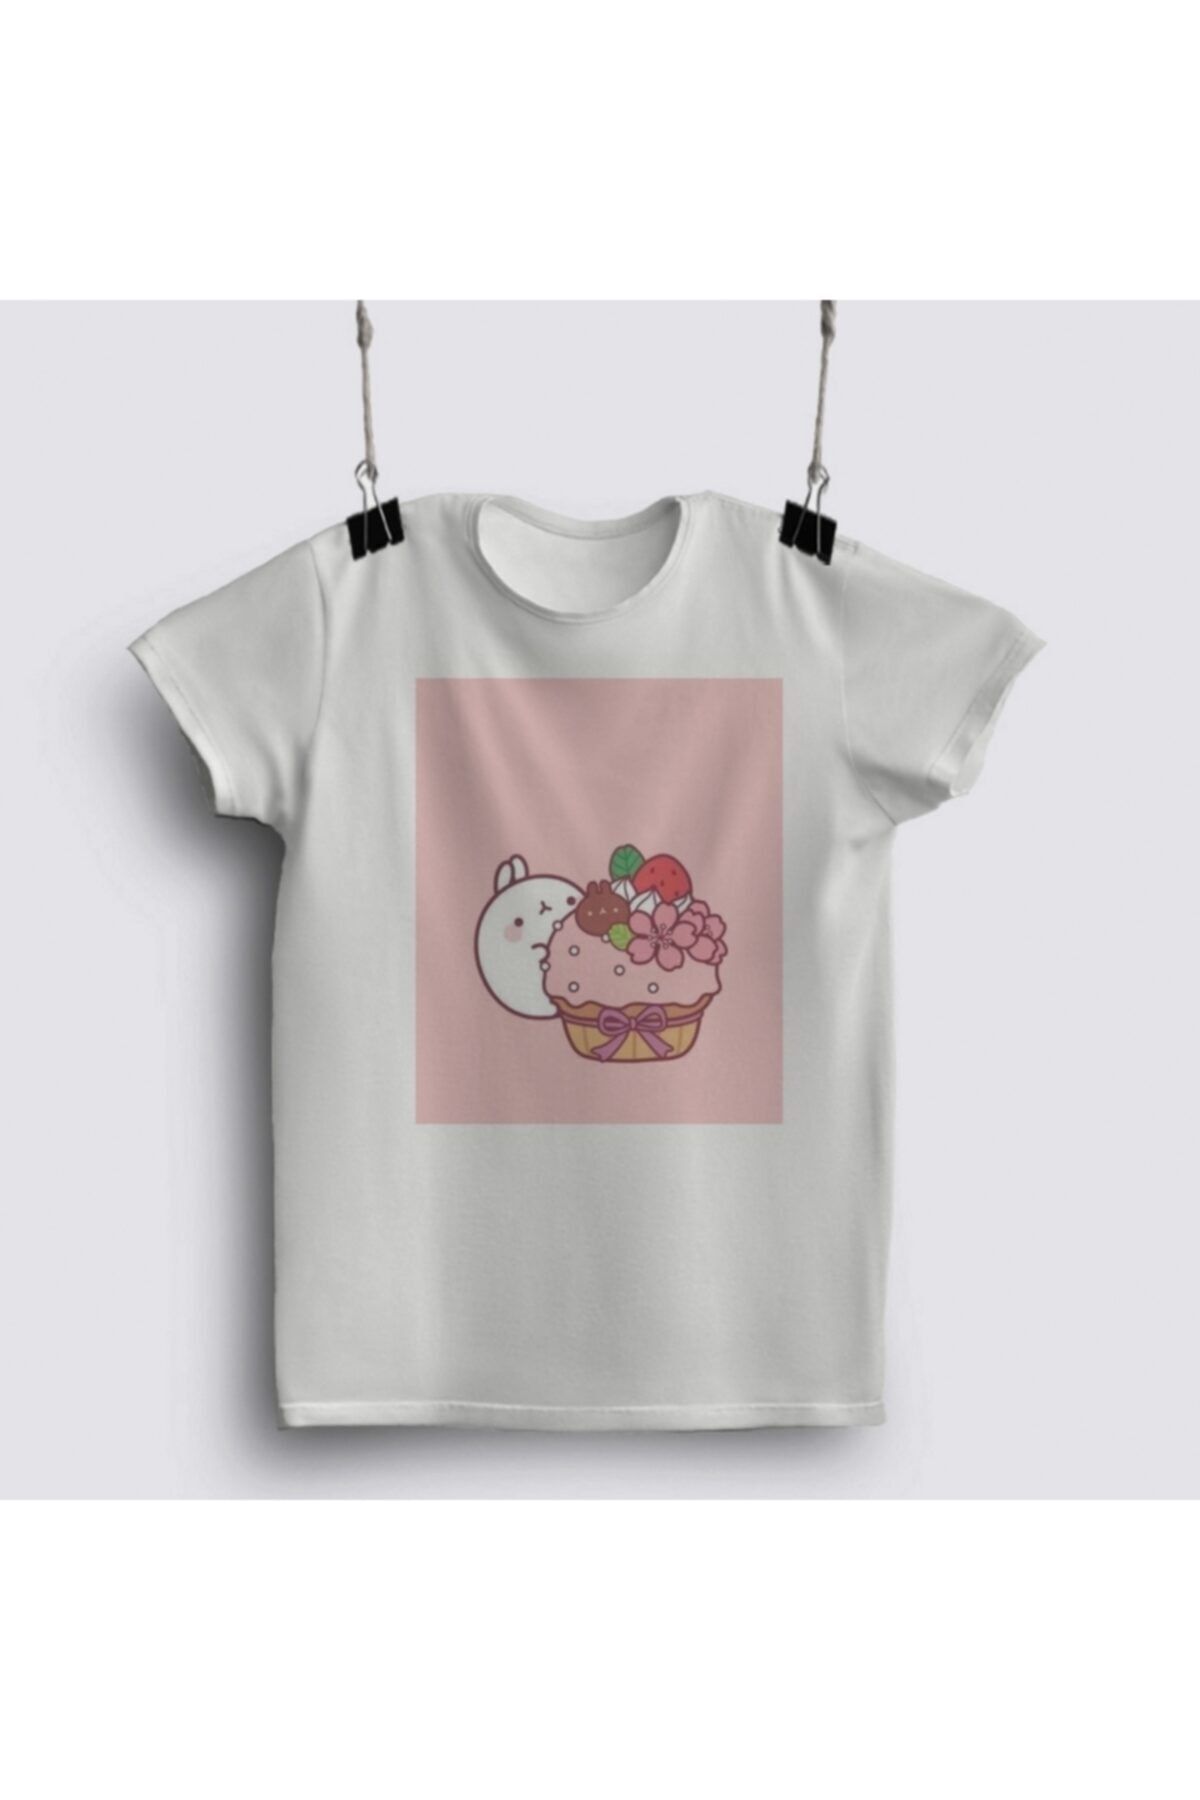 Fizello Kawaii Kids Cupcake Holiday T-Shirt